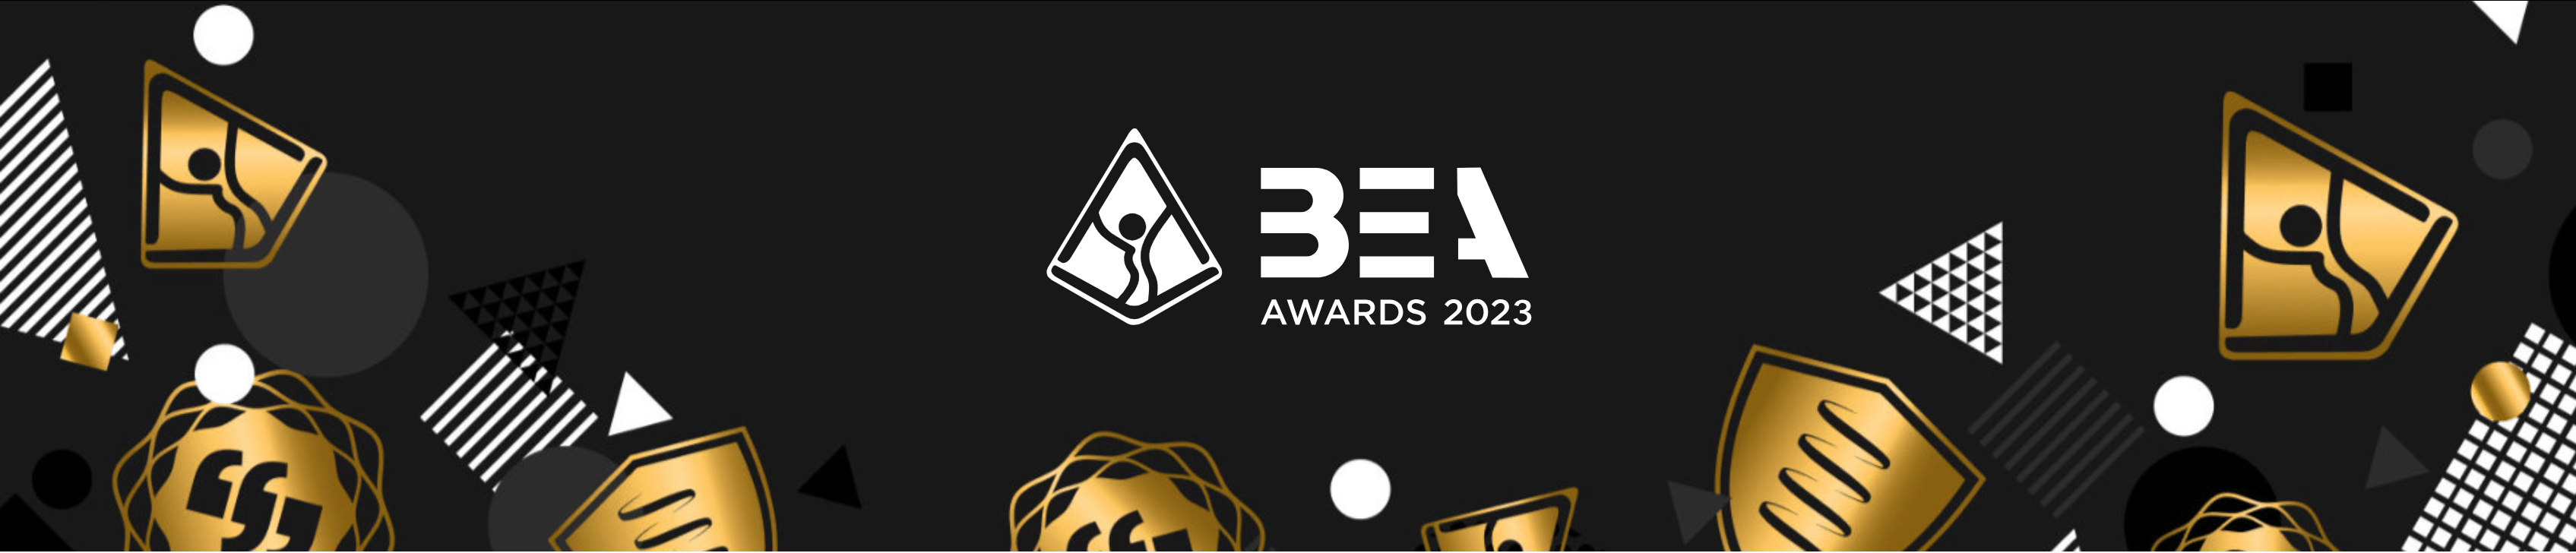 Bea Awards 2023